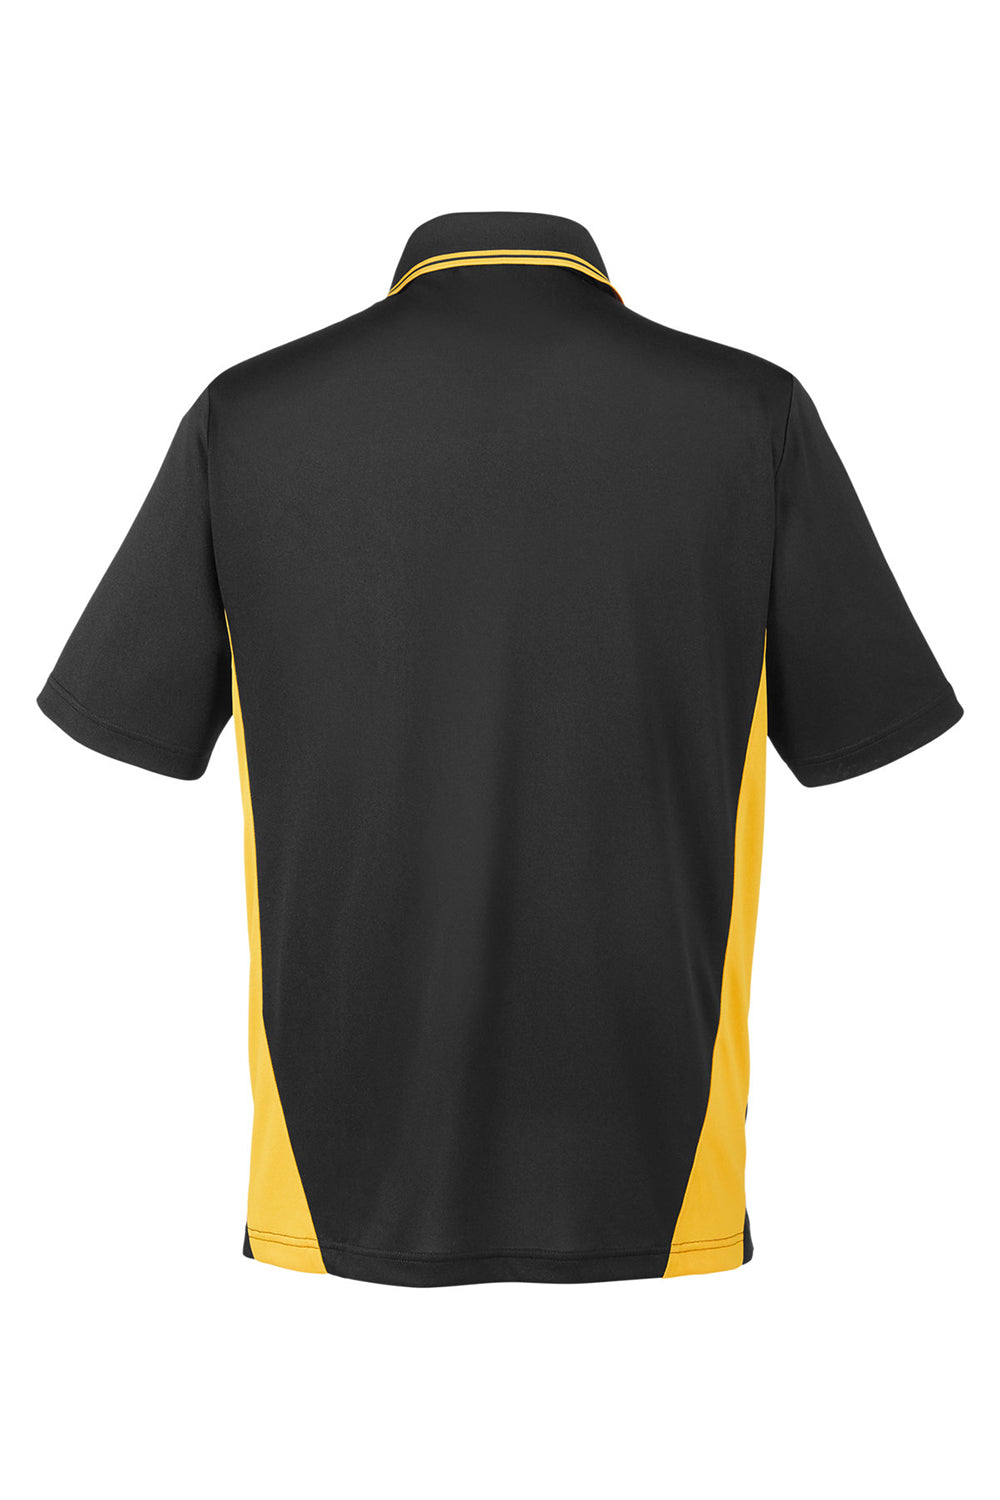 Harriton M386/M386T Mens Flash Performance Moisture Wicking Colorblock Short Sleeve Polo Shirt Black/Sunray Yellow Flat Back